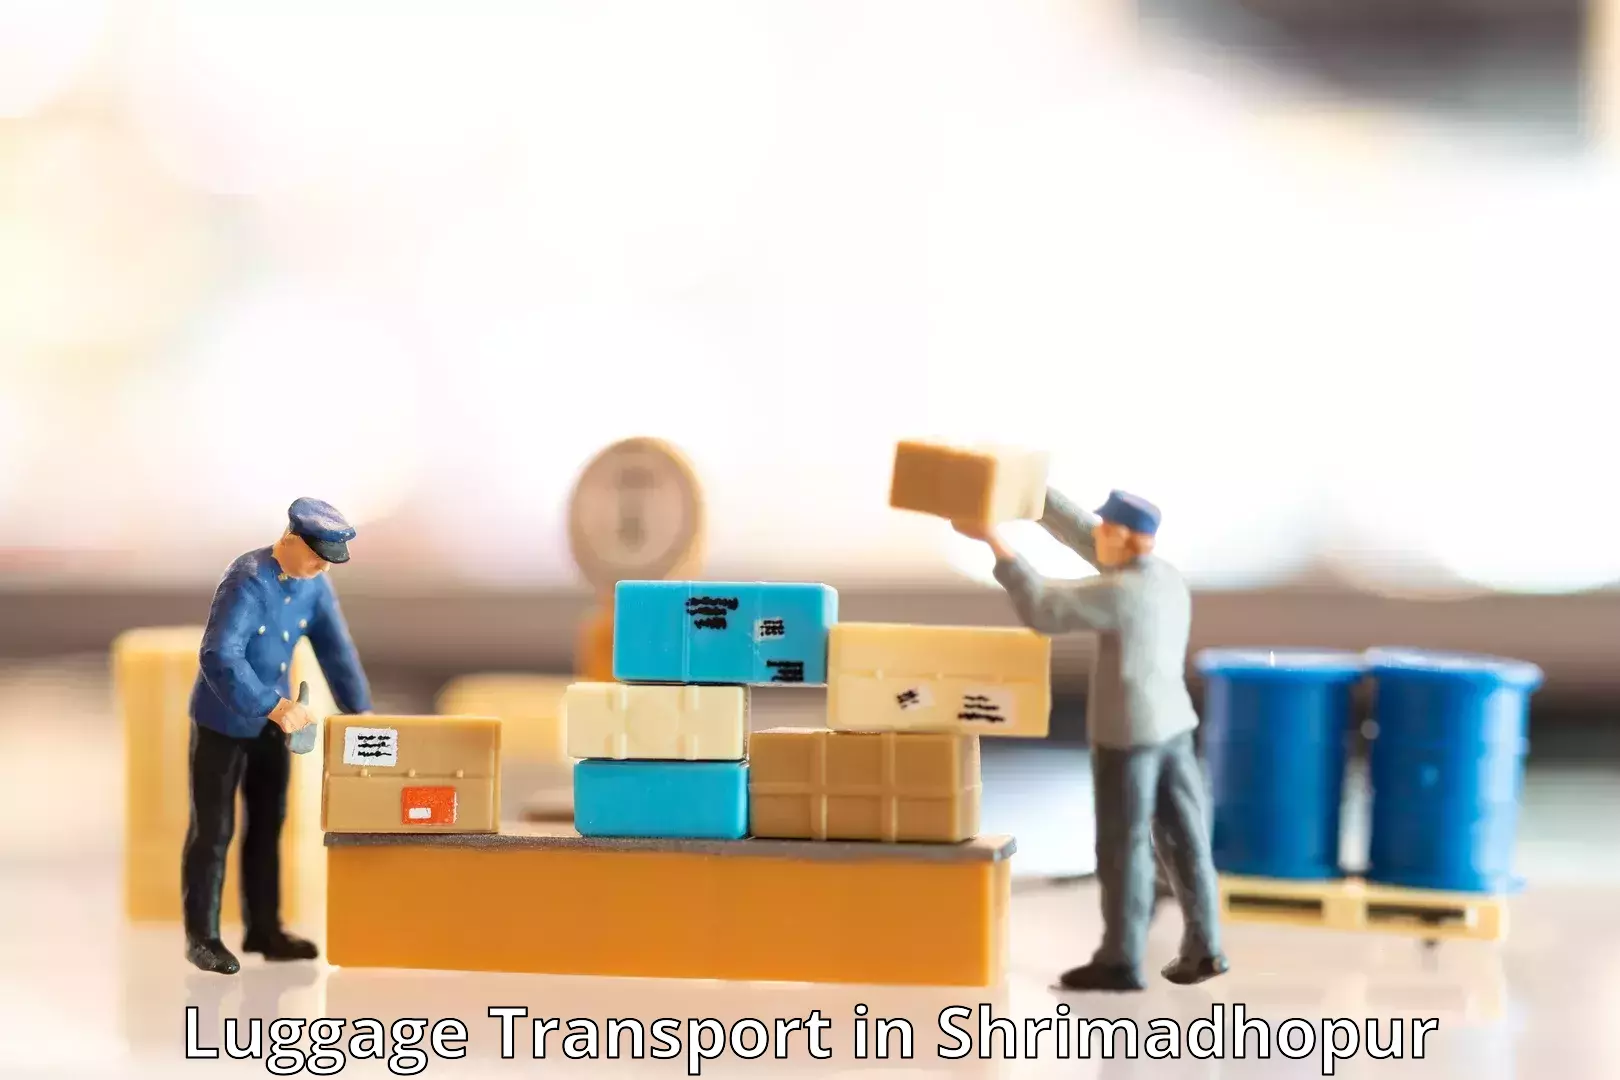 Luggage transport rates in Shrimadhopur